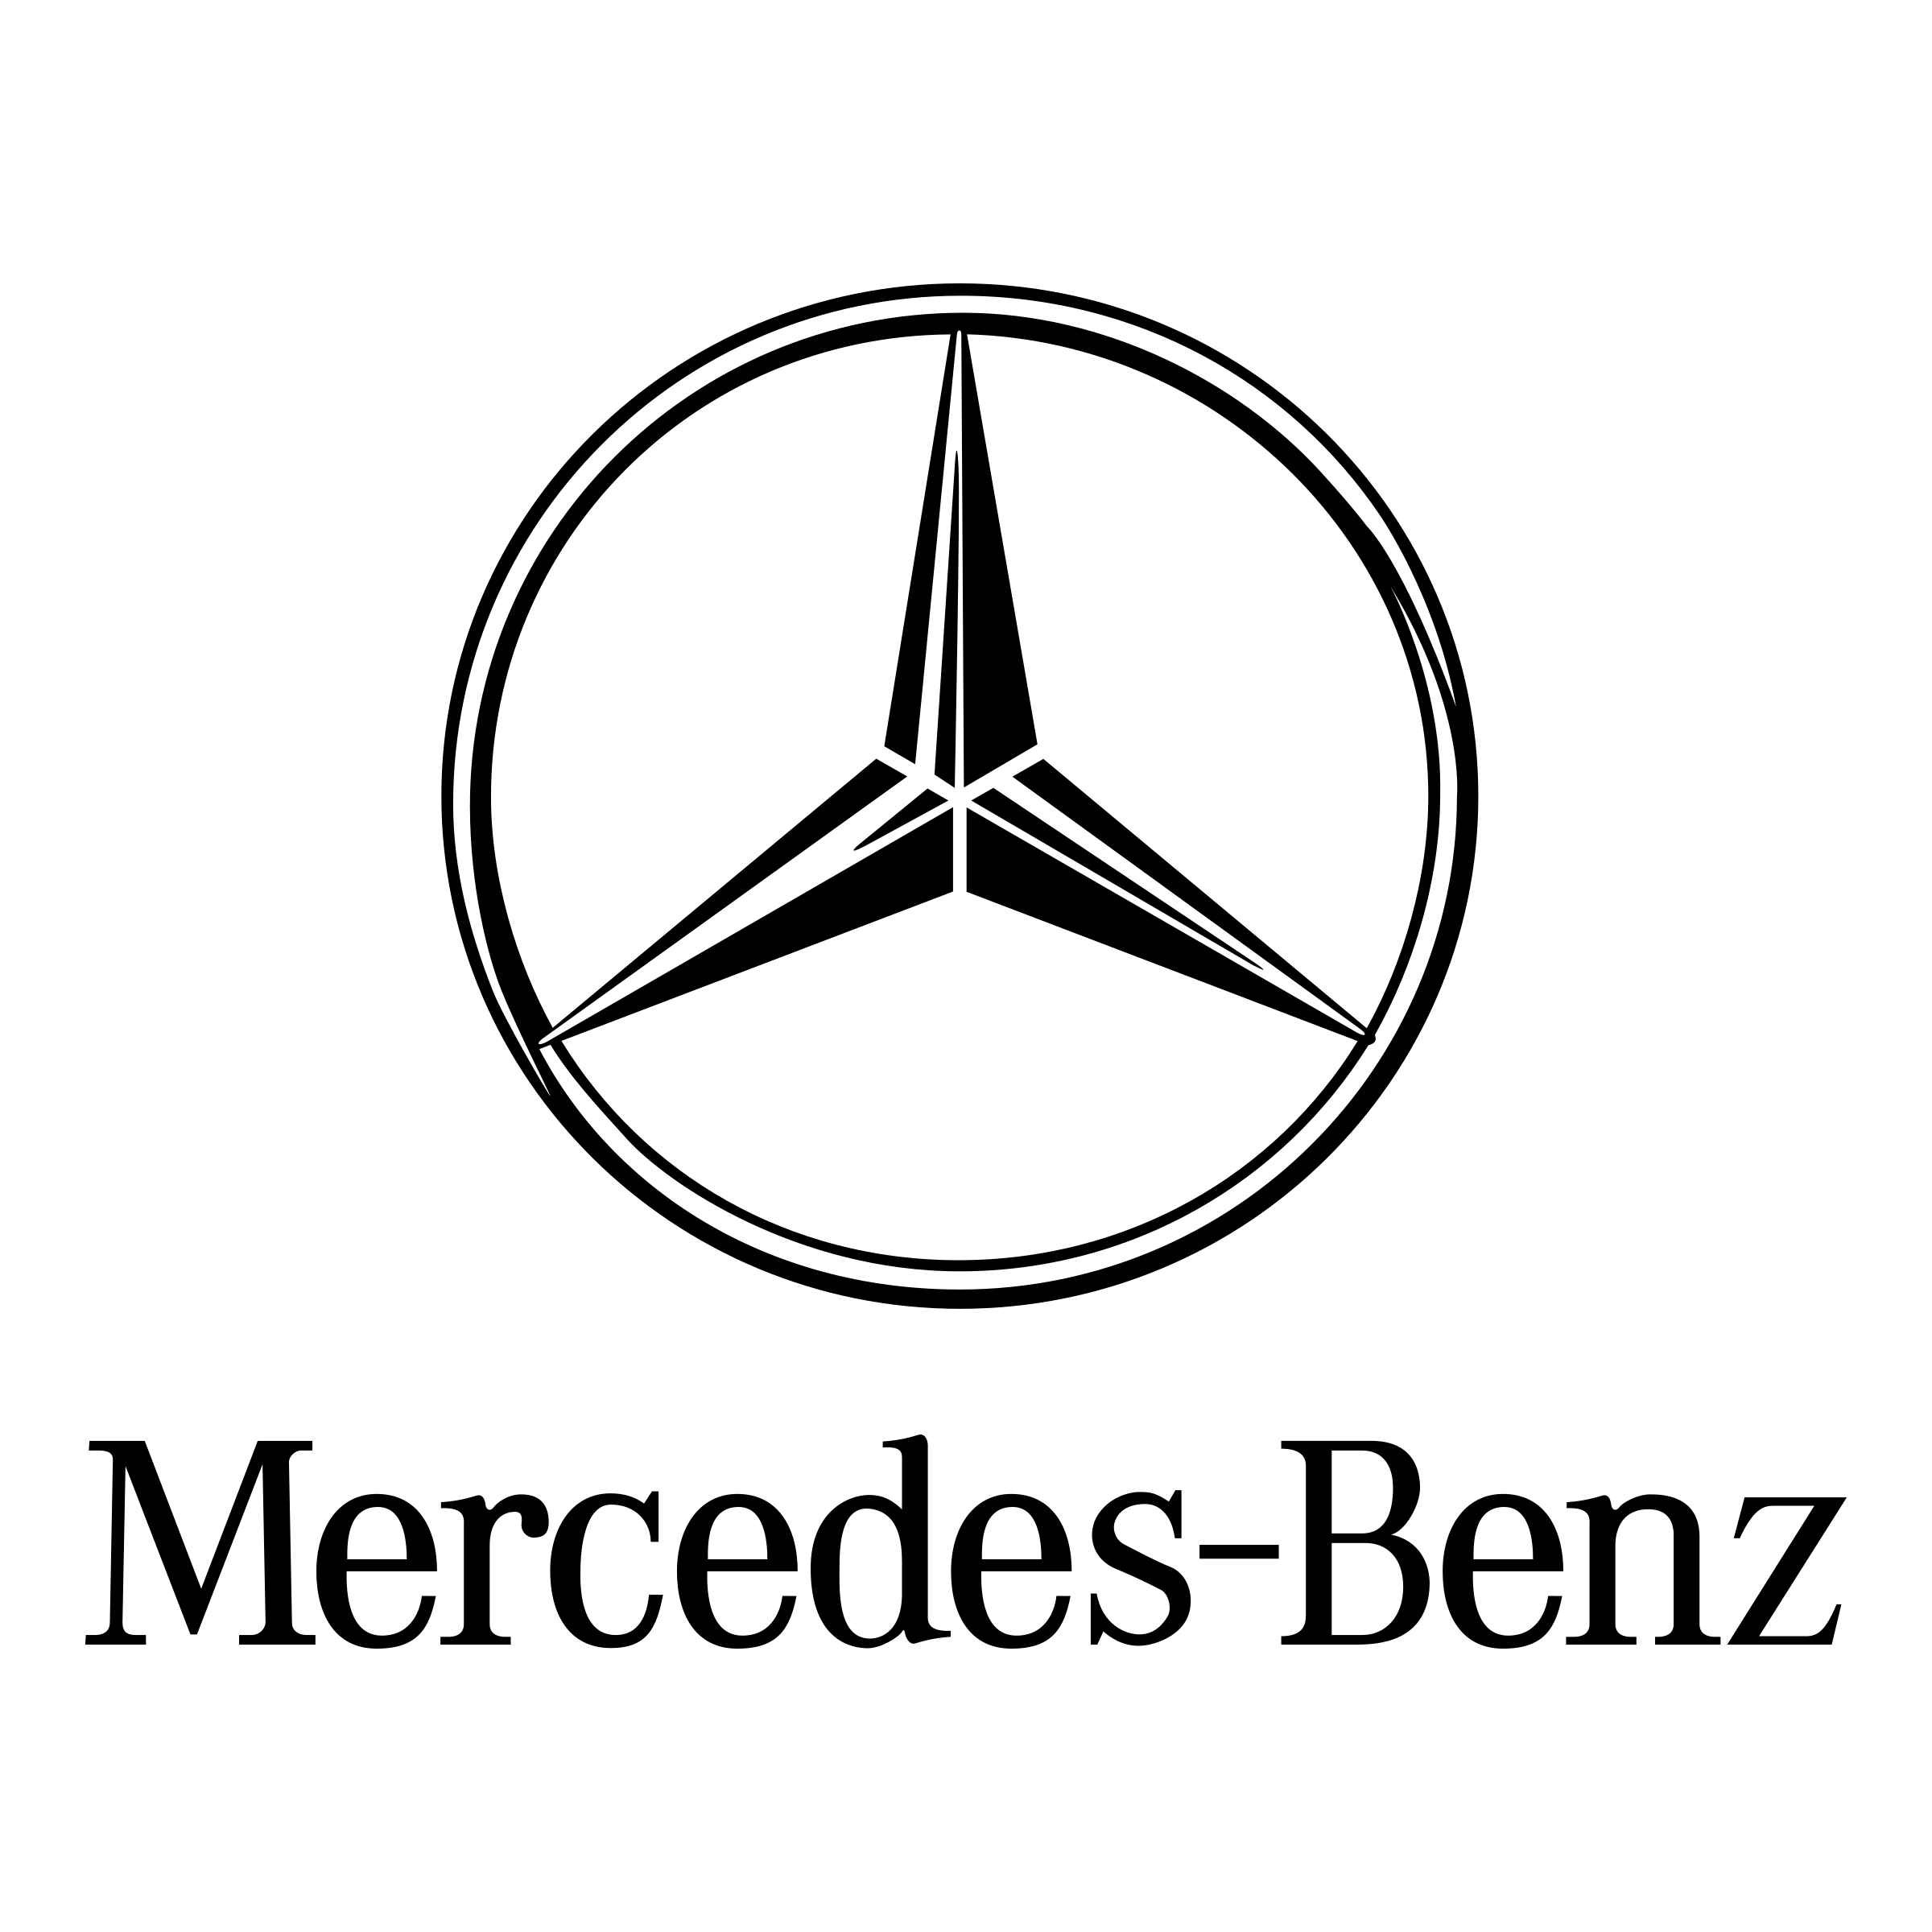 Benz Logo - Mercedes Benz Logo PNG Transparent & SVG Vector - Freebie Supply